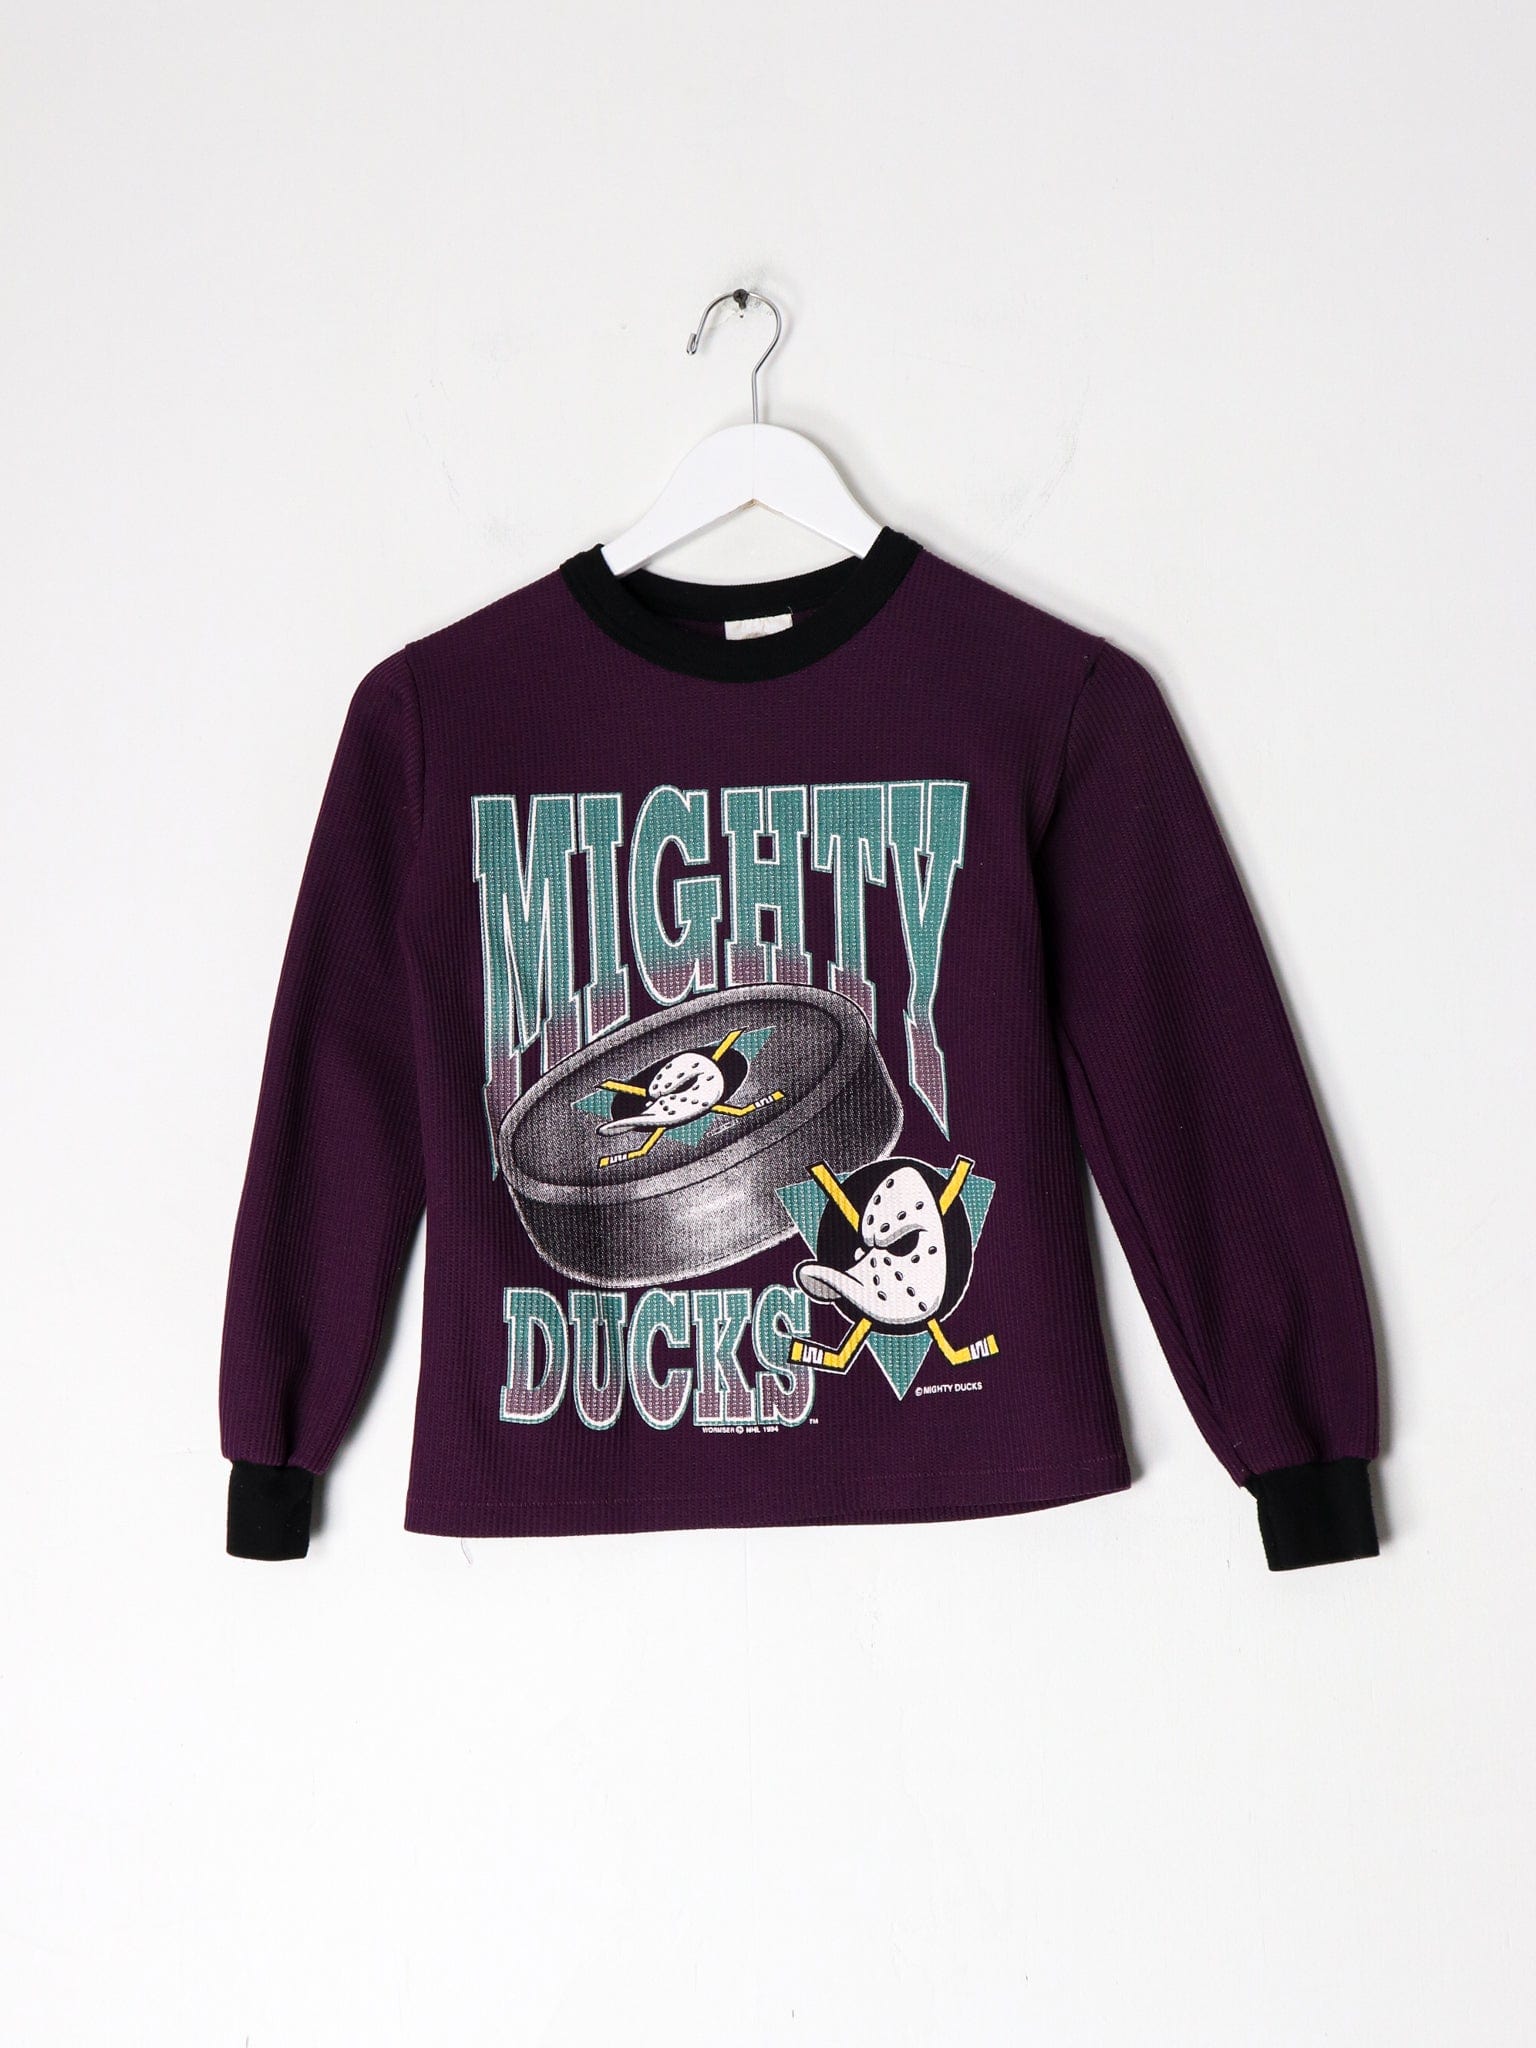 Anaheim Mighty Ducks Jacket Youth XL Boys Purple Vintage 90s